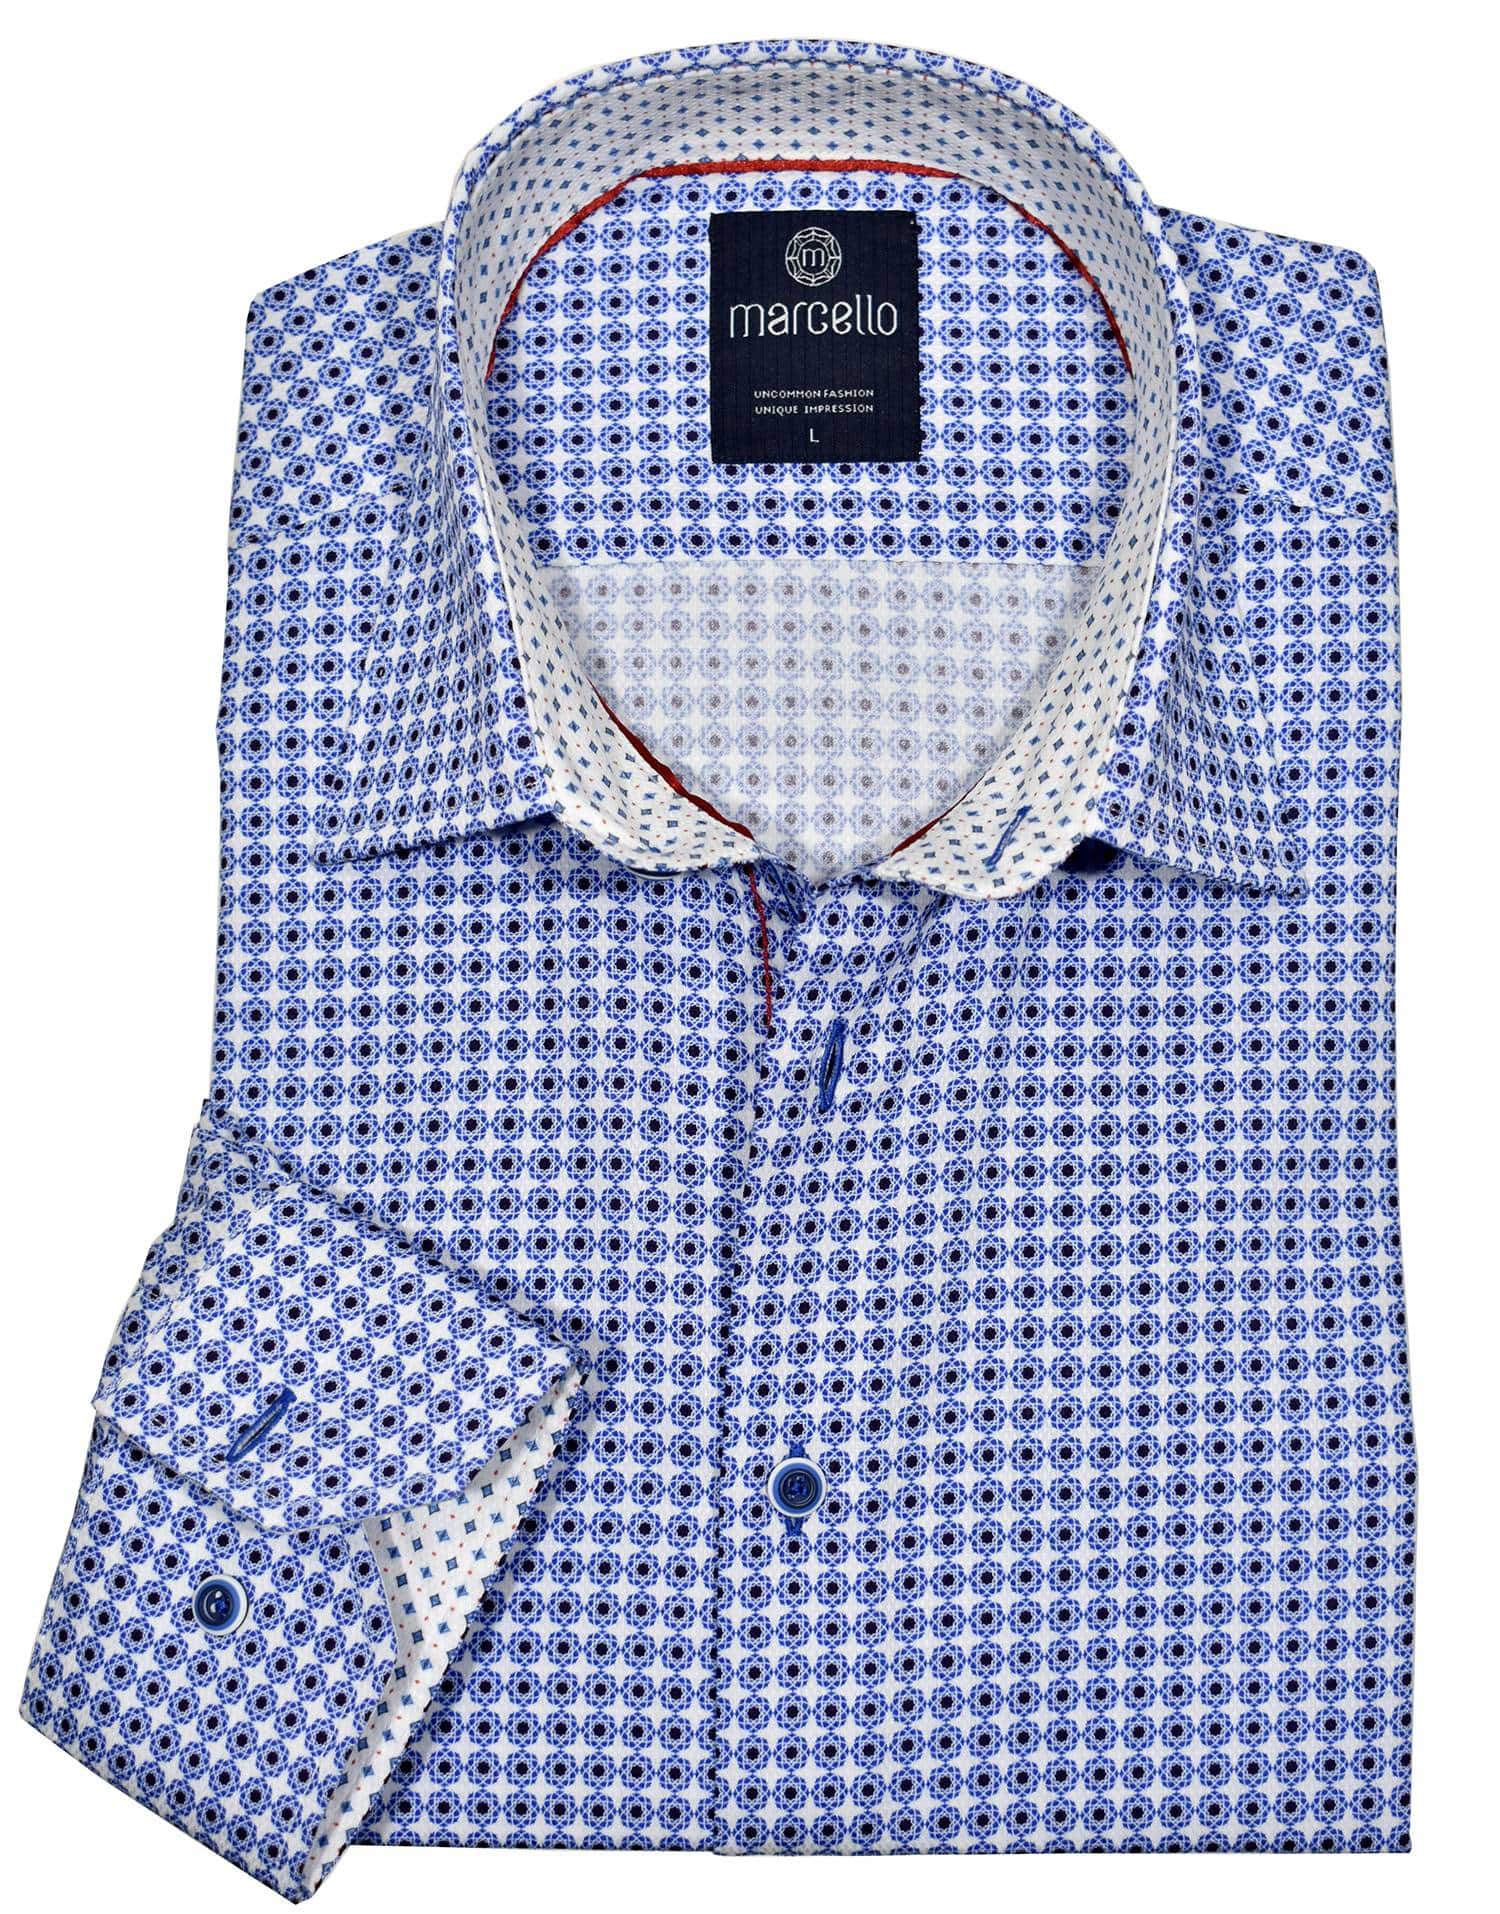 Marcello White & Blue Medallion Print Shirt - Rainwater's Men's Clothing and Tuxedo Rental